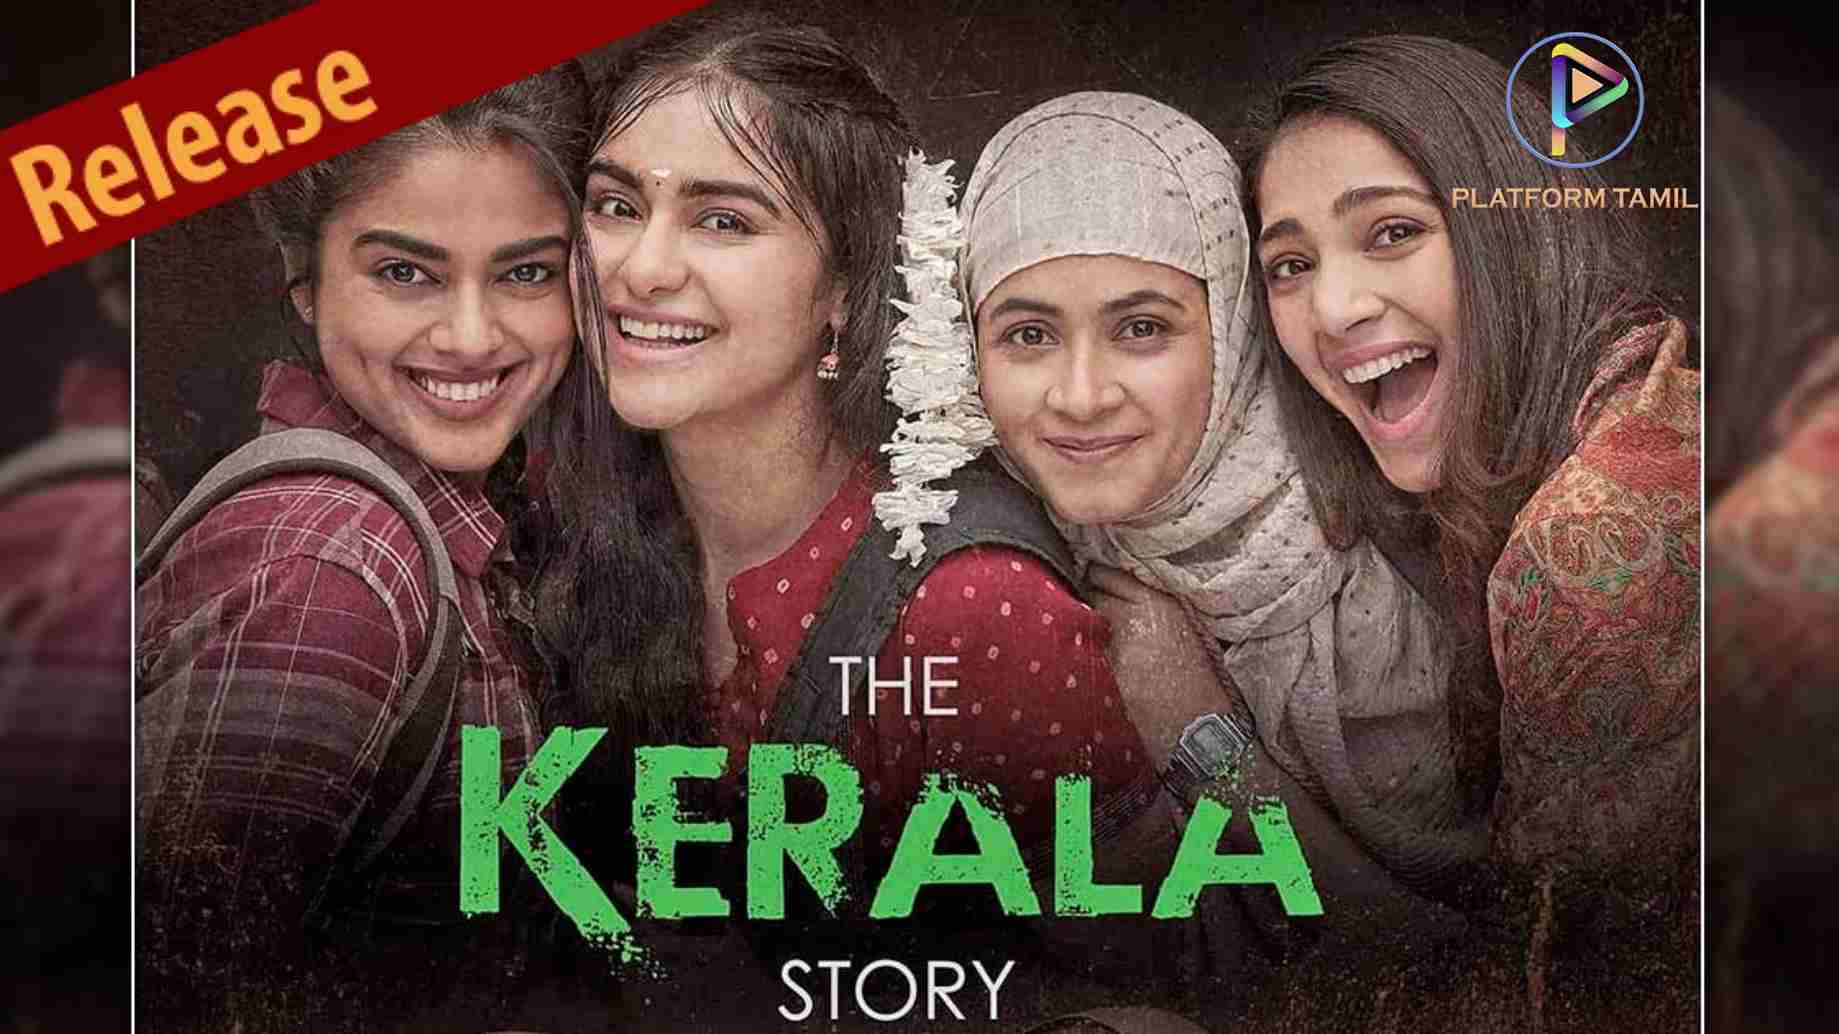 The Kerala Story Screening in Theatres - Platform Tamil